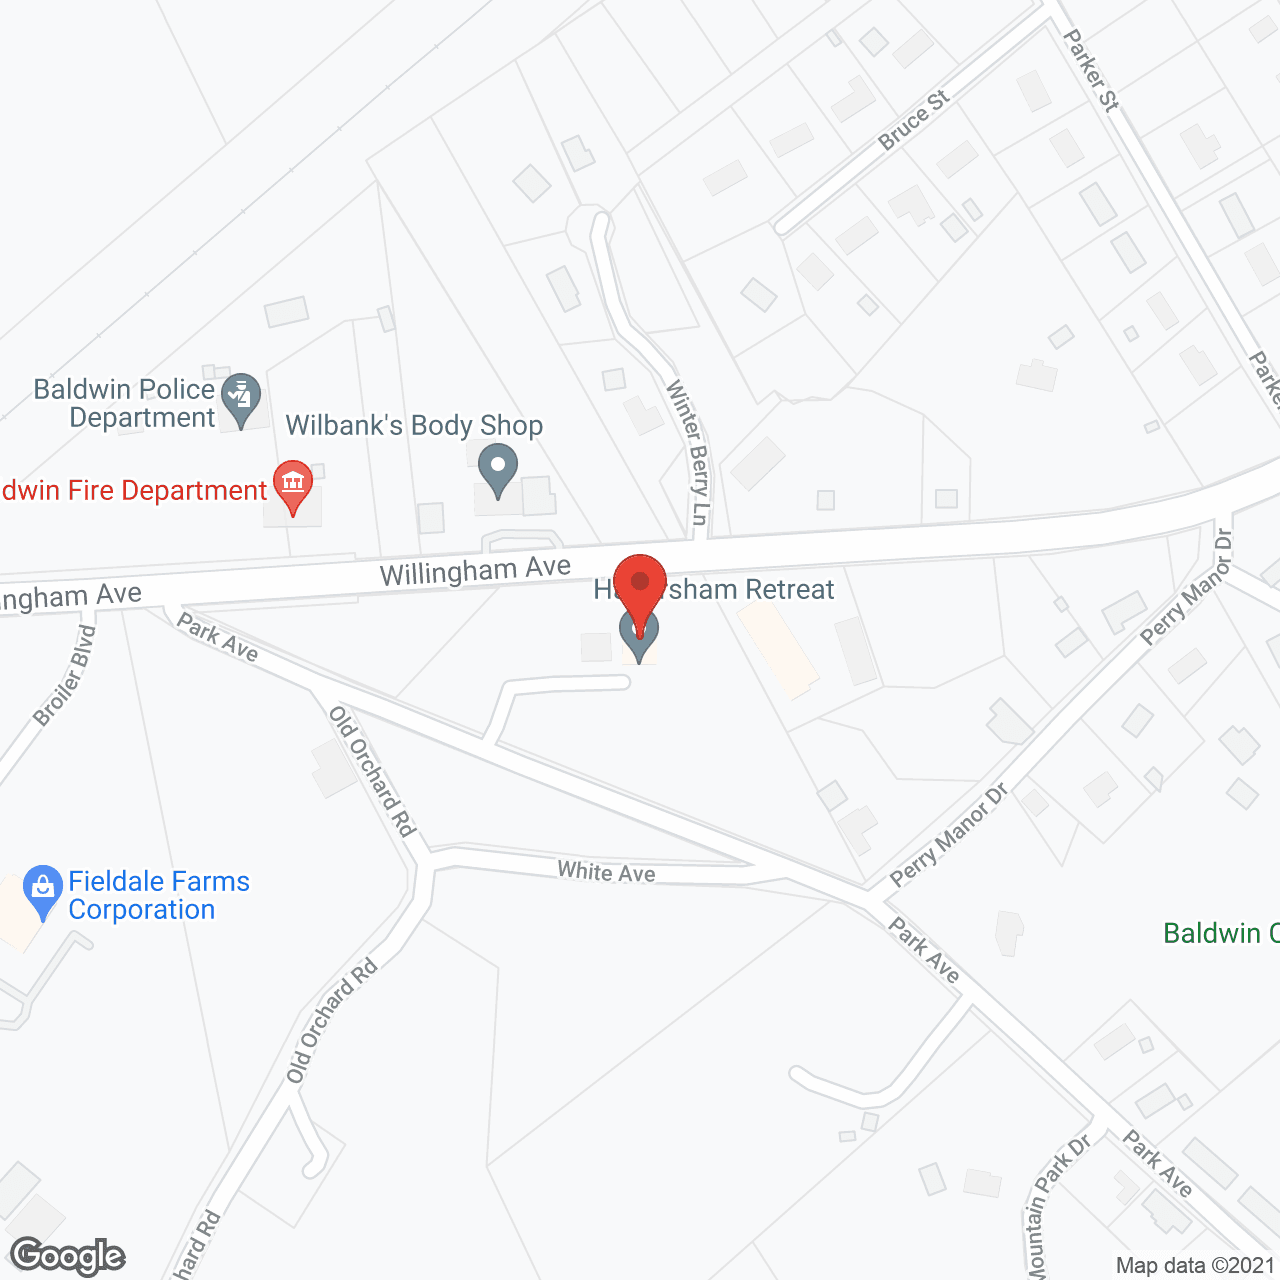 Habersham Retreat in google map